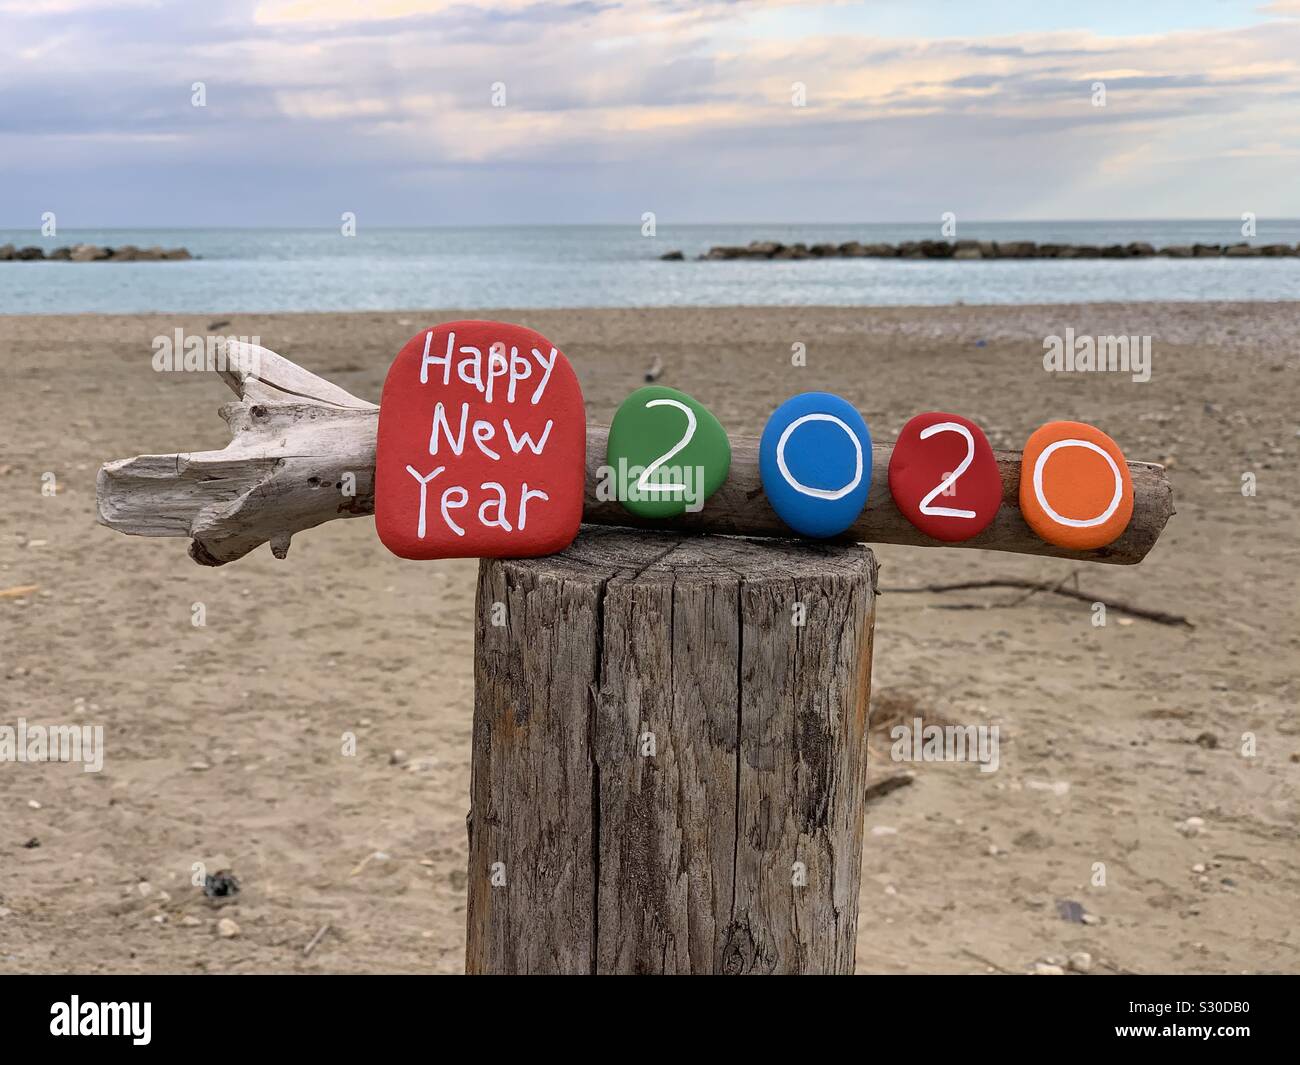 Happy New Year 2020 Stock Photo